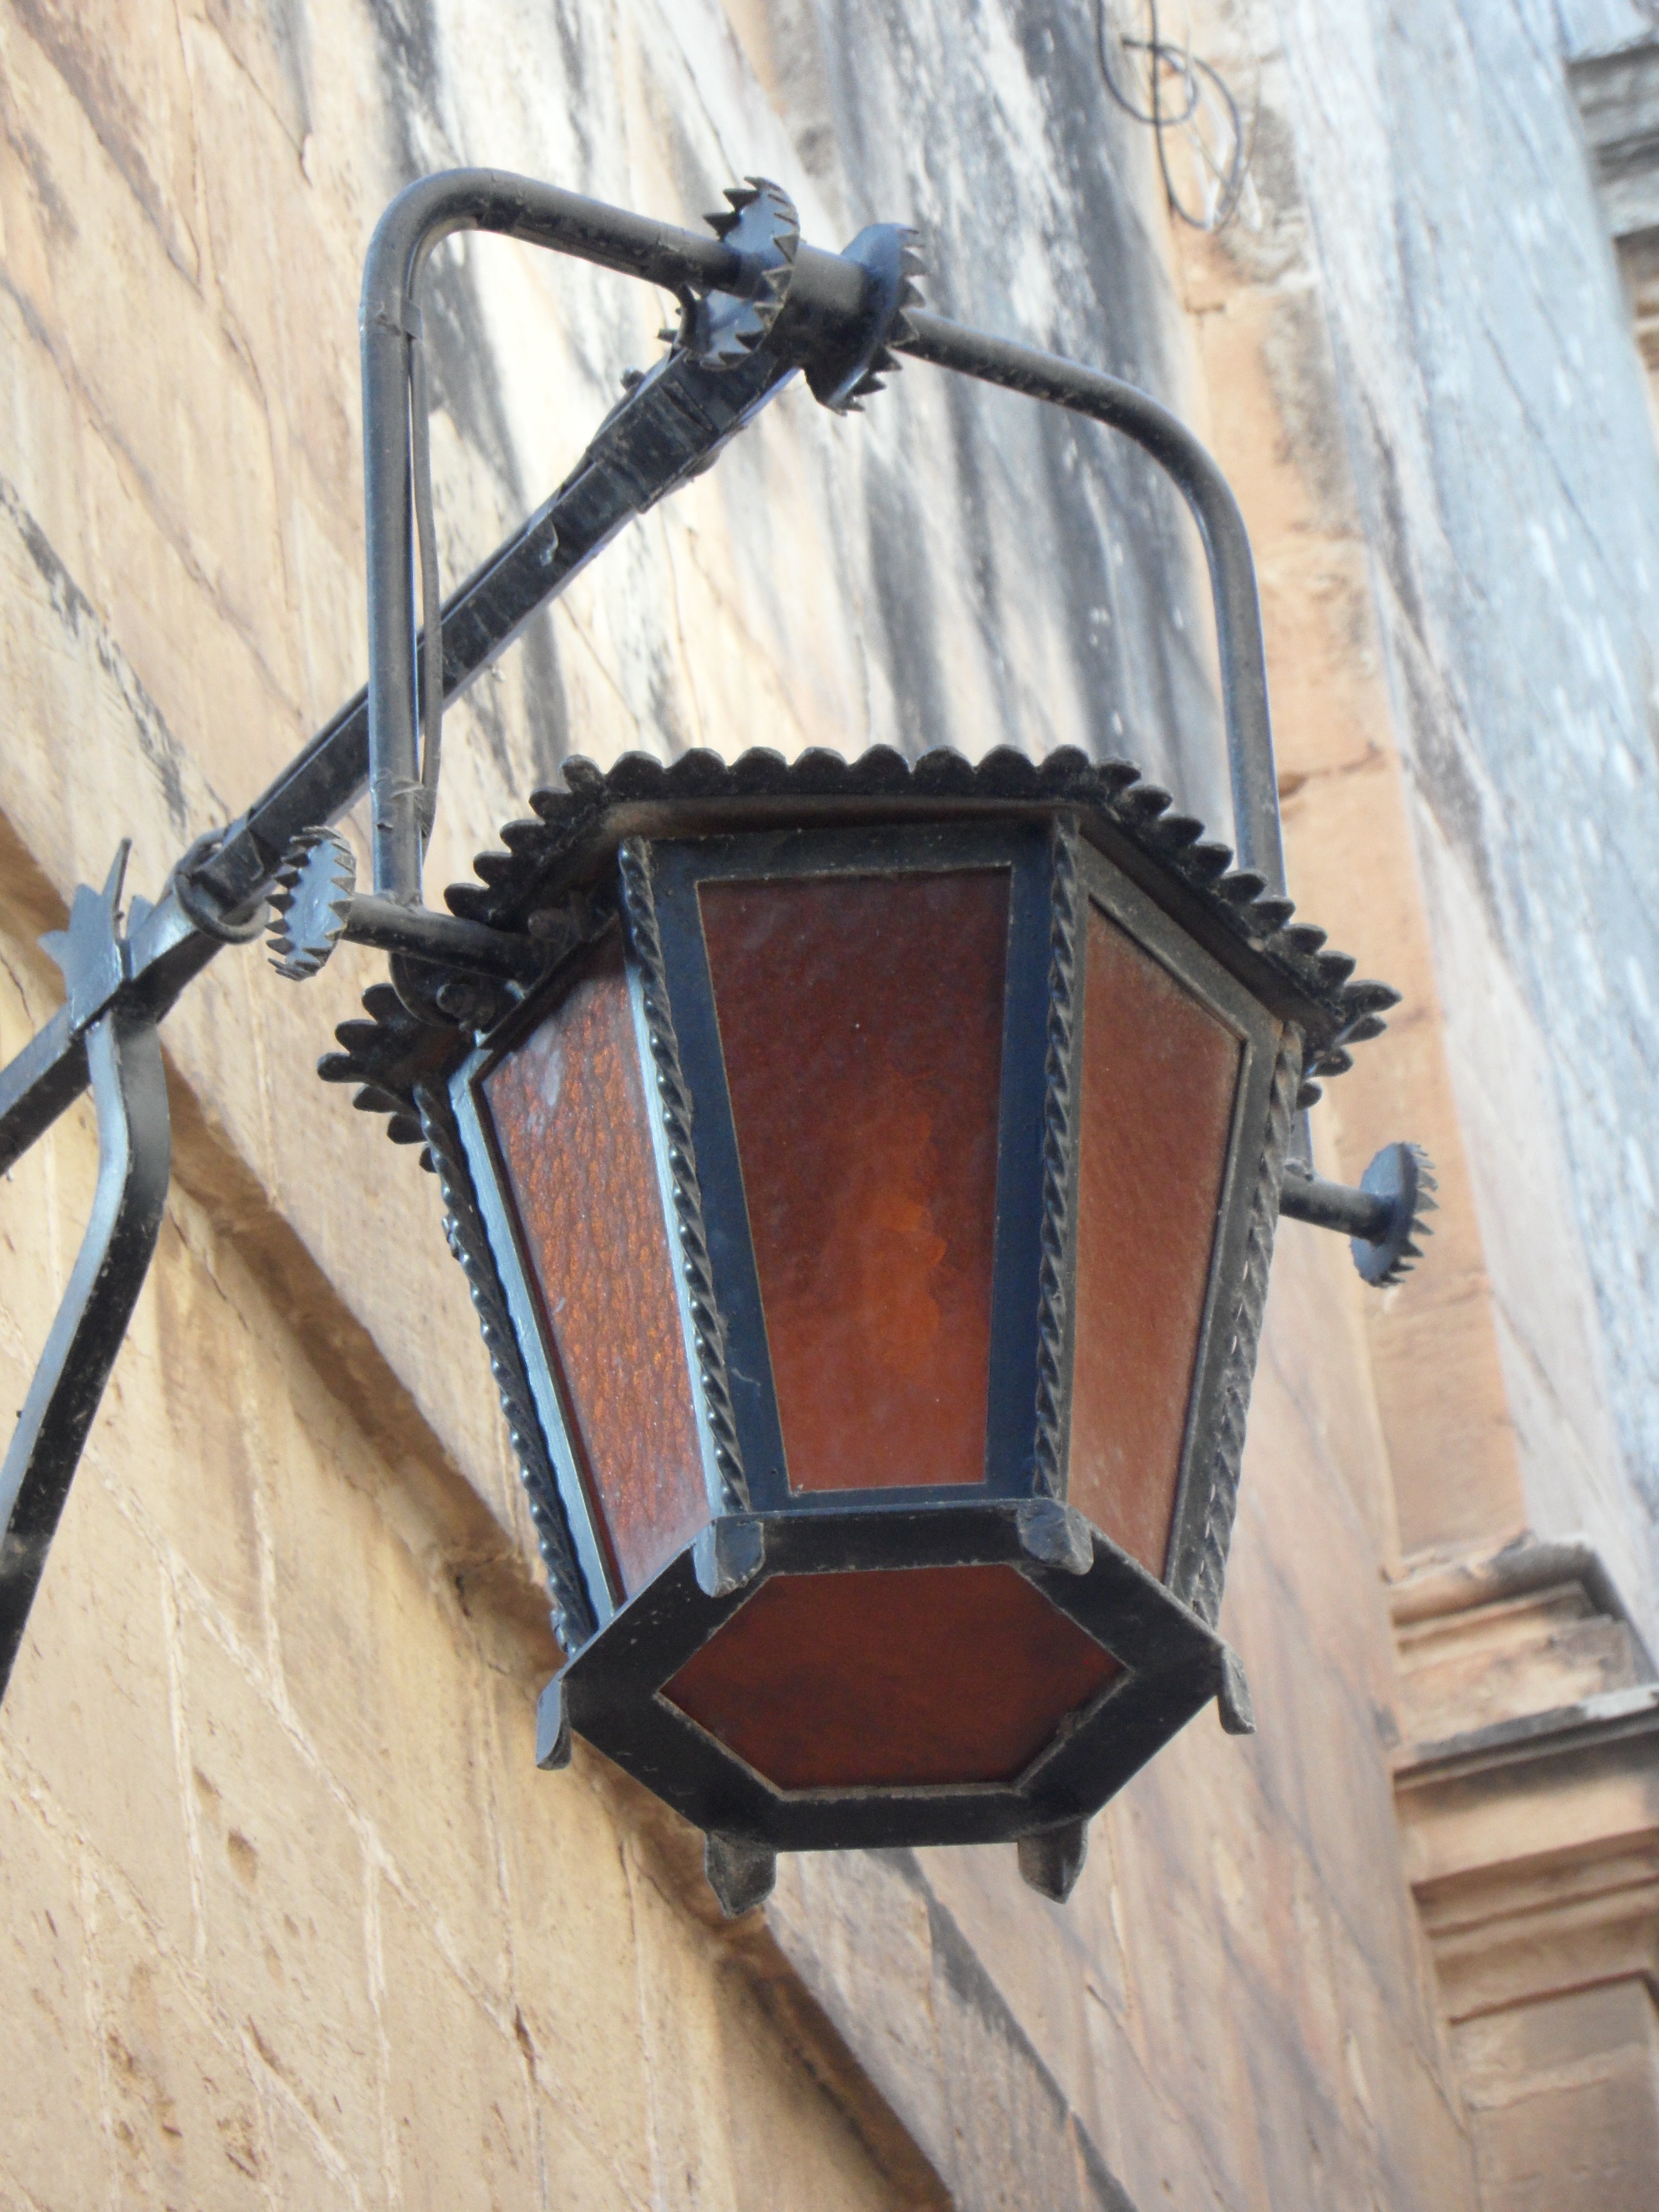 black and brown street lamp